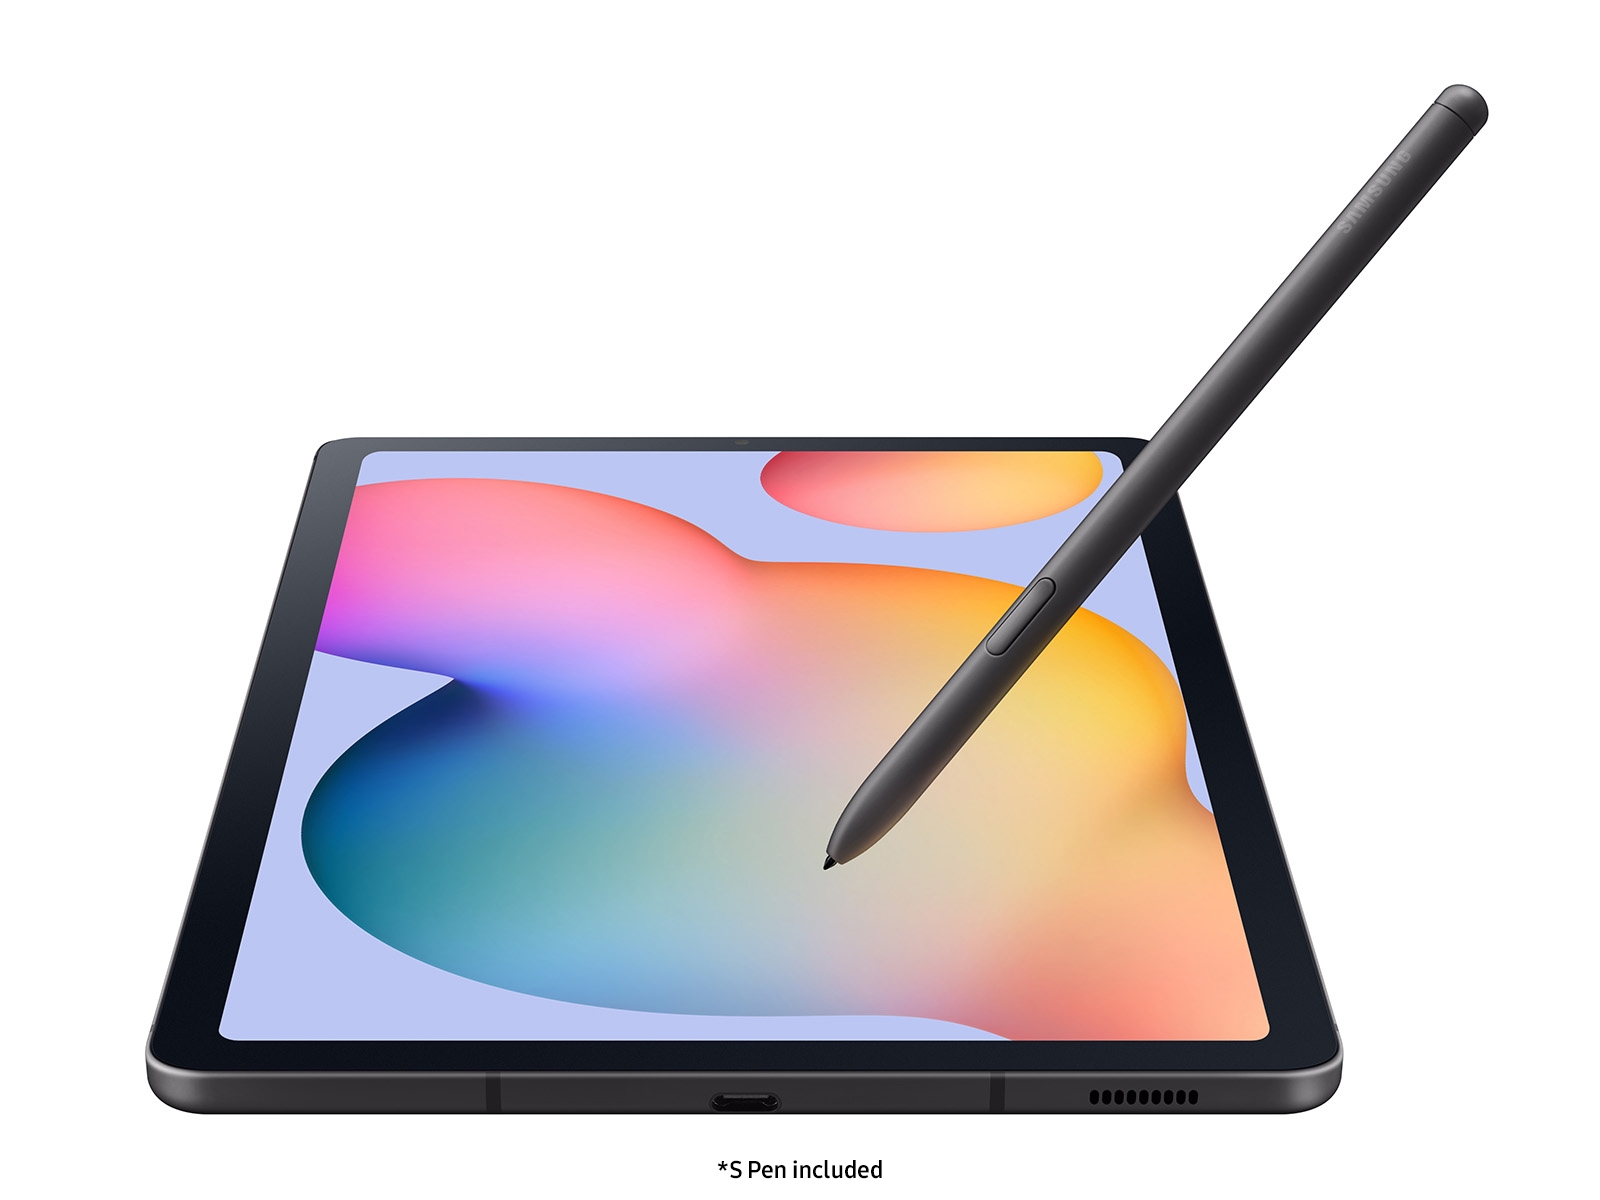 Galaxy Tab S6 Lite, 64GB, Oxford Gray (Wi-Fi) Tablets - SM 